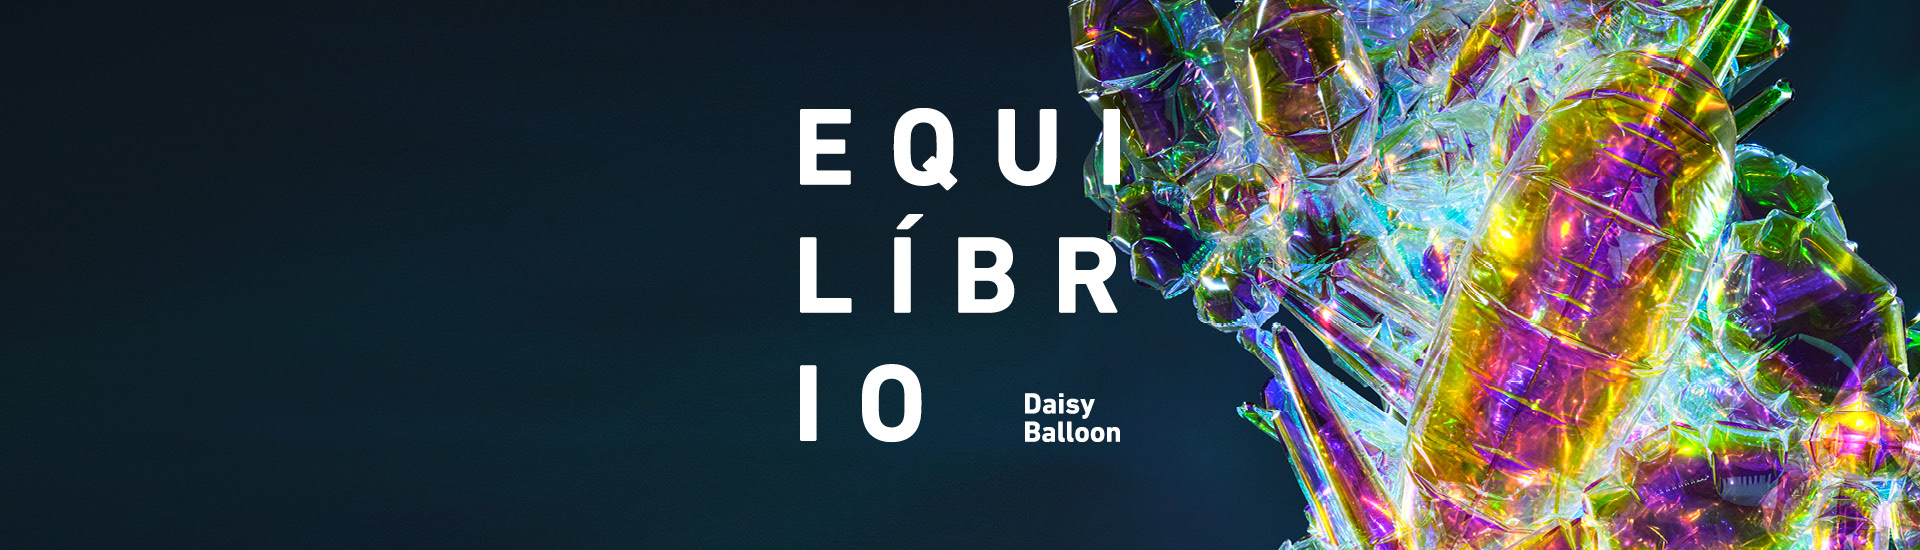 Banner informativo. Equilíbrio, Daisy Balloon. Atrás do texto, em letras brancas, o fundo é azul escuro com foto de balões coloridos, furta-cor, à direita.